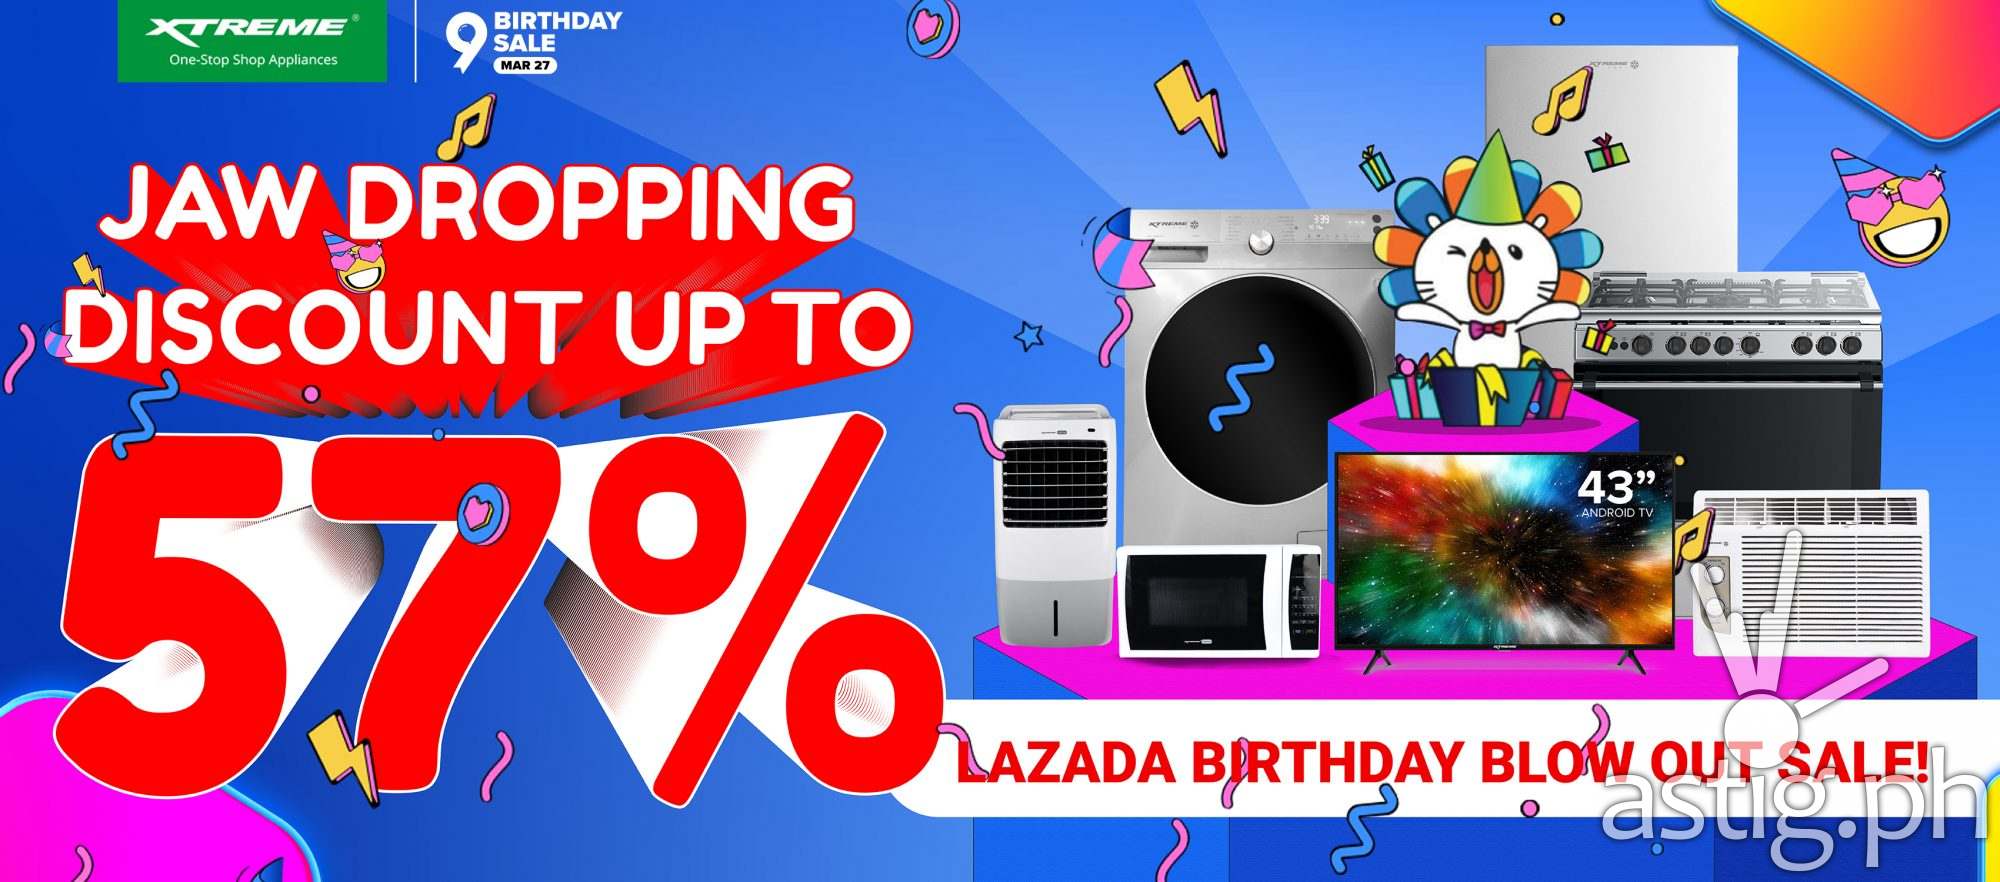 XTREME Appliances x Lazada 9th Birthday Blowout Sale